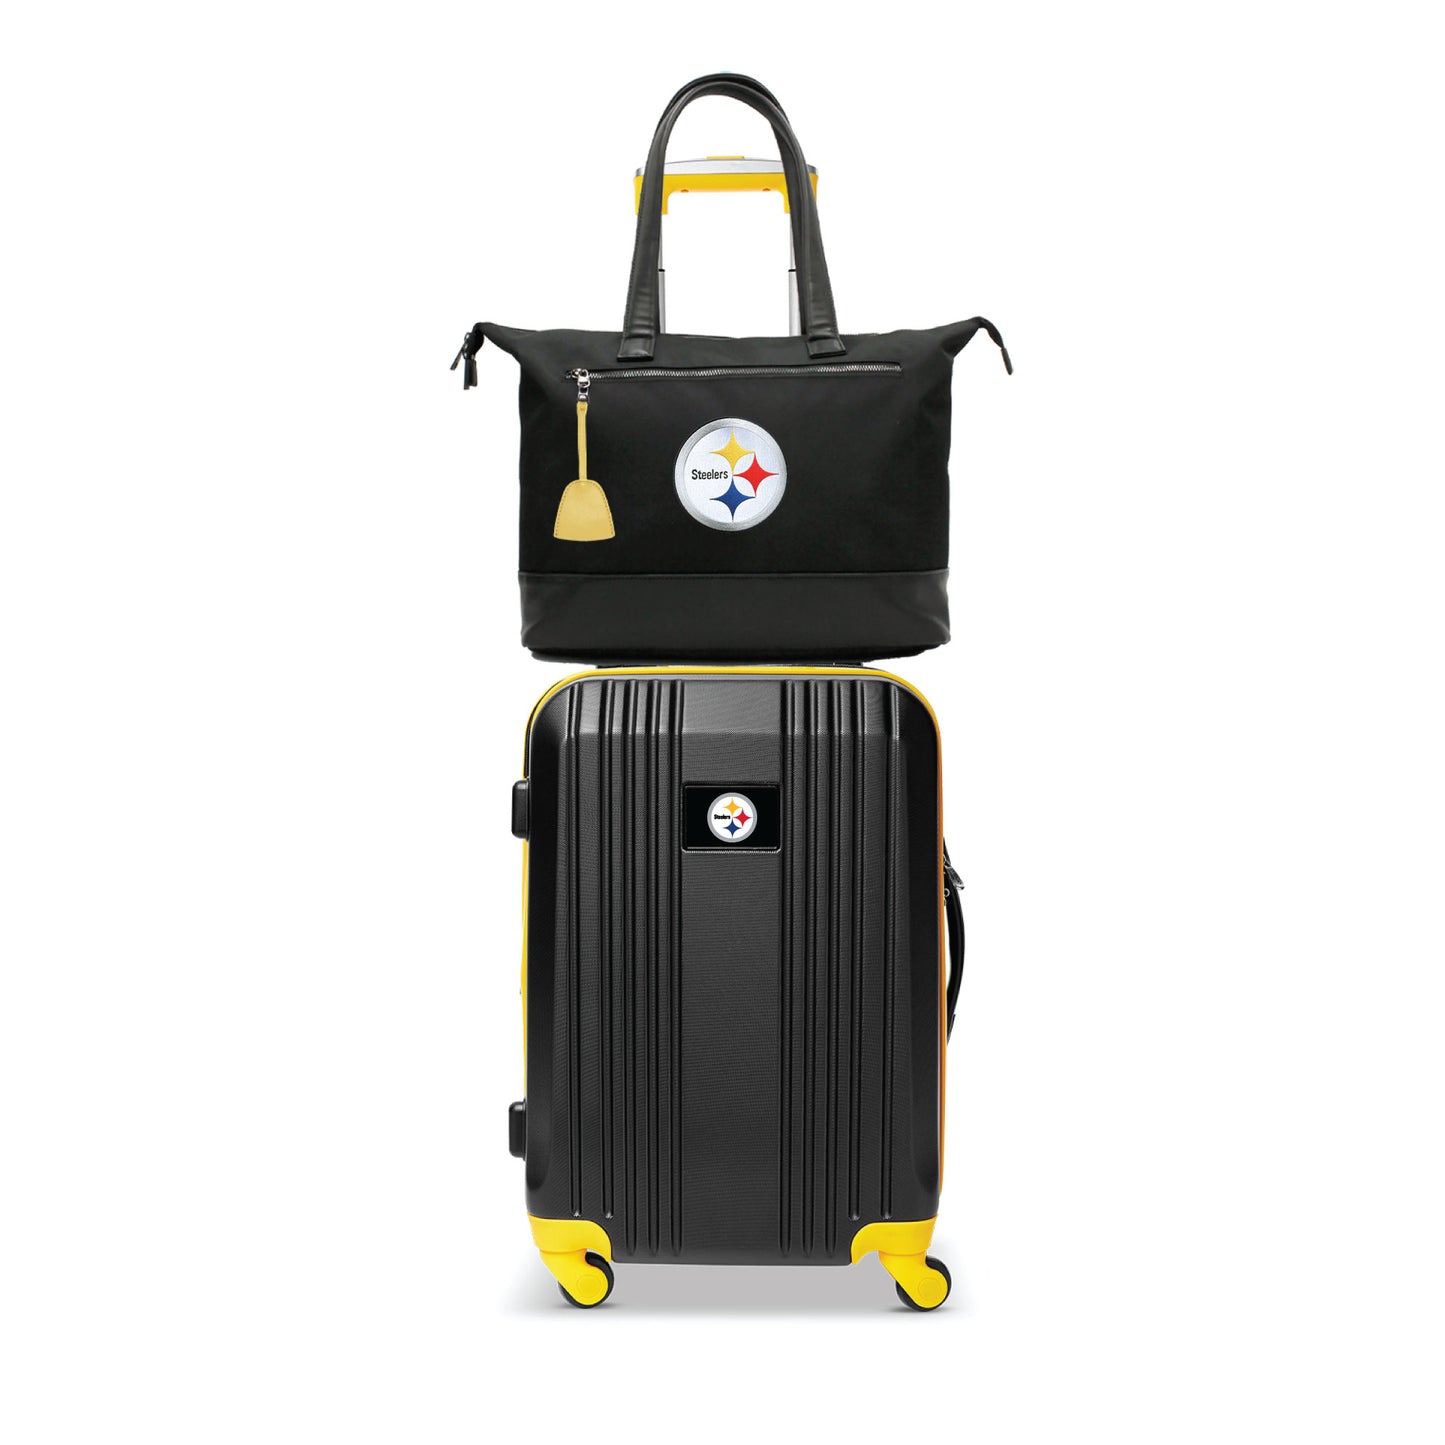 Pittsburgh Steelers Premium Laptop Tote Bag and Luggage Set